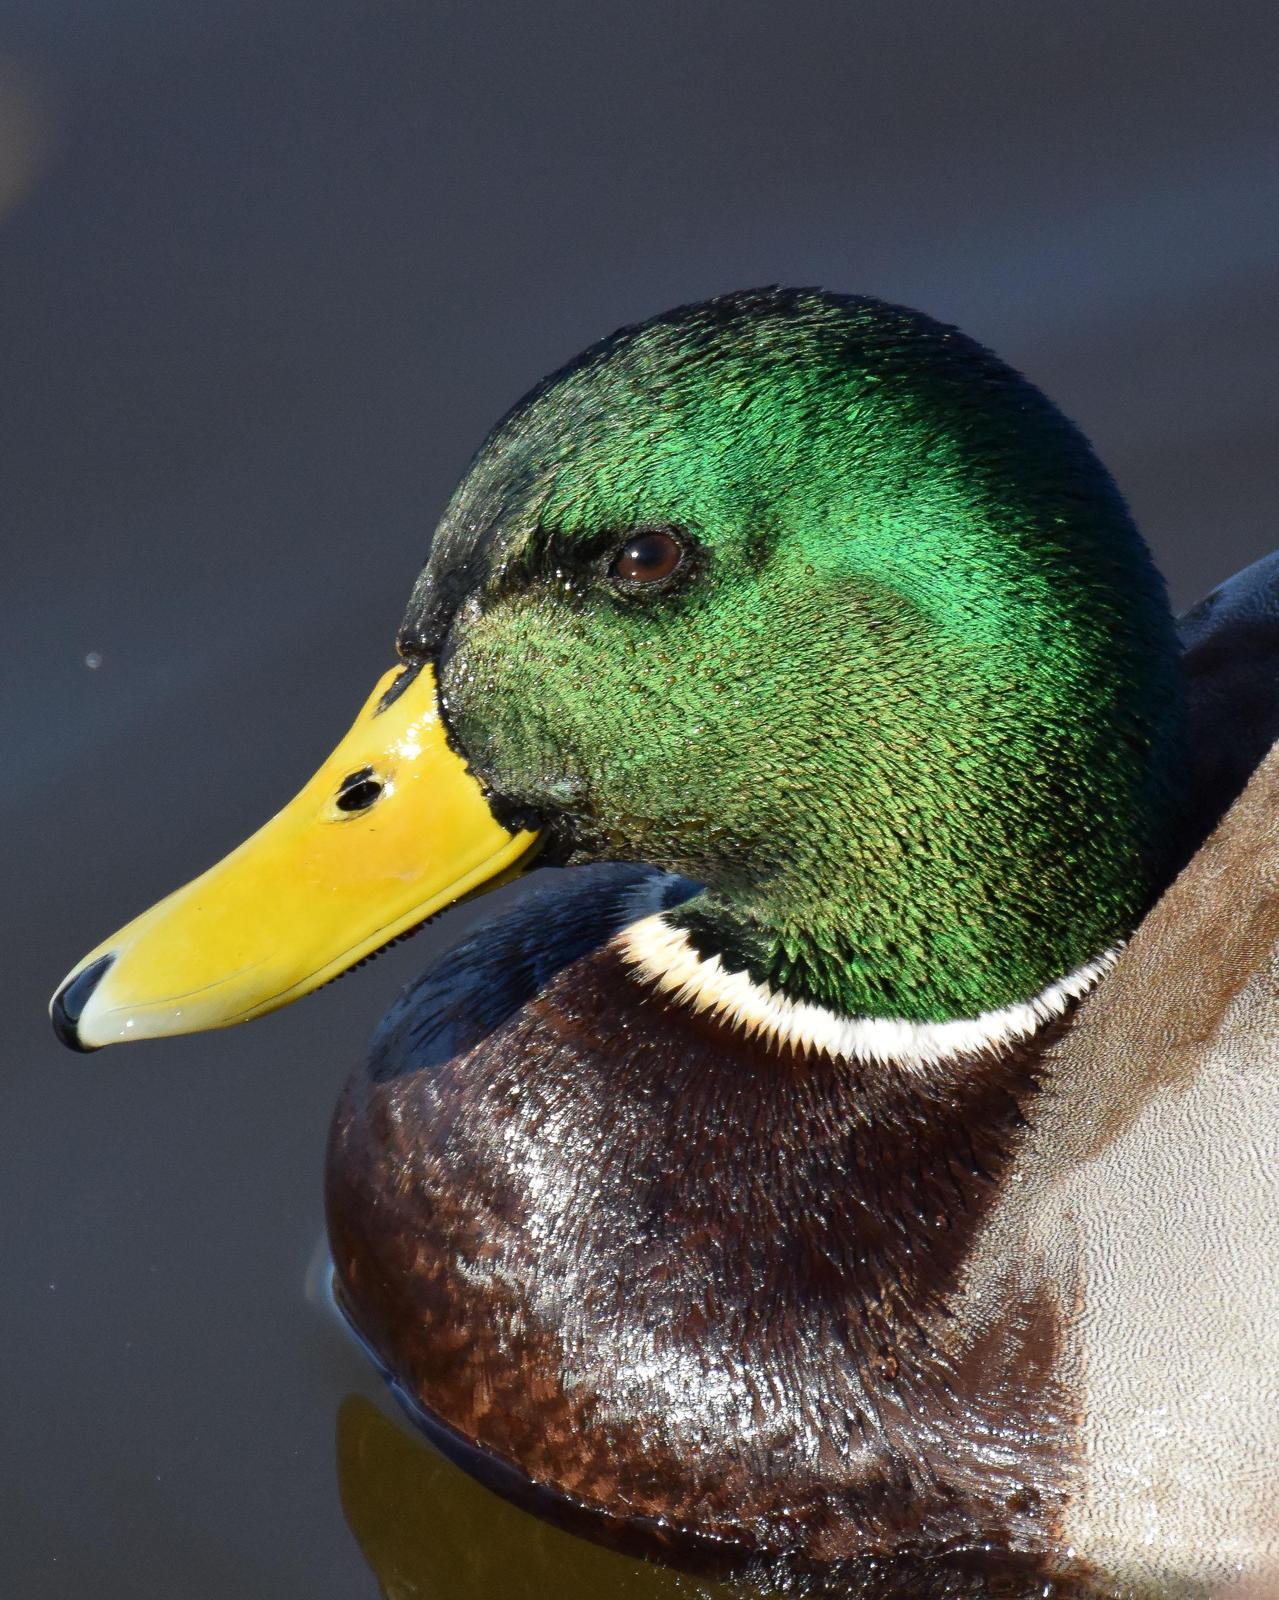 Mallard/Mexican Duck Photo by Steve Percival